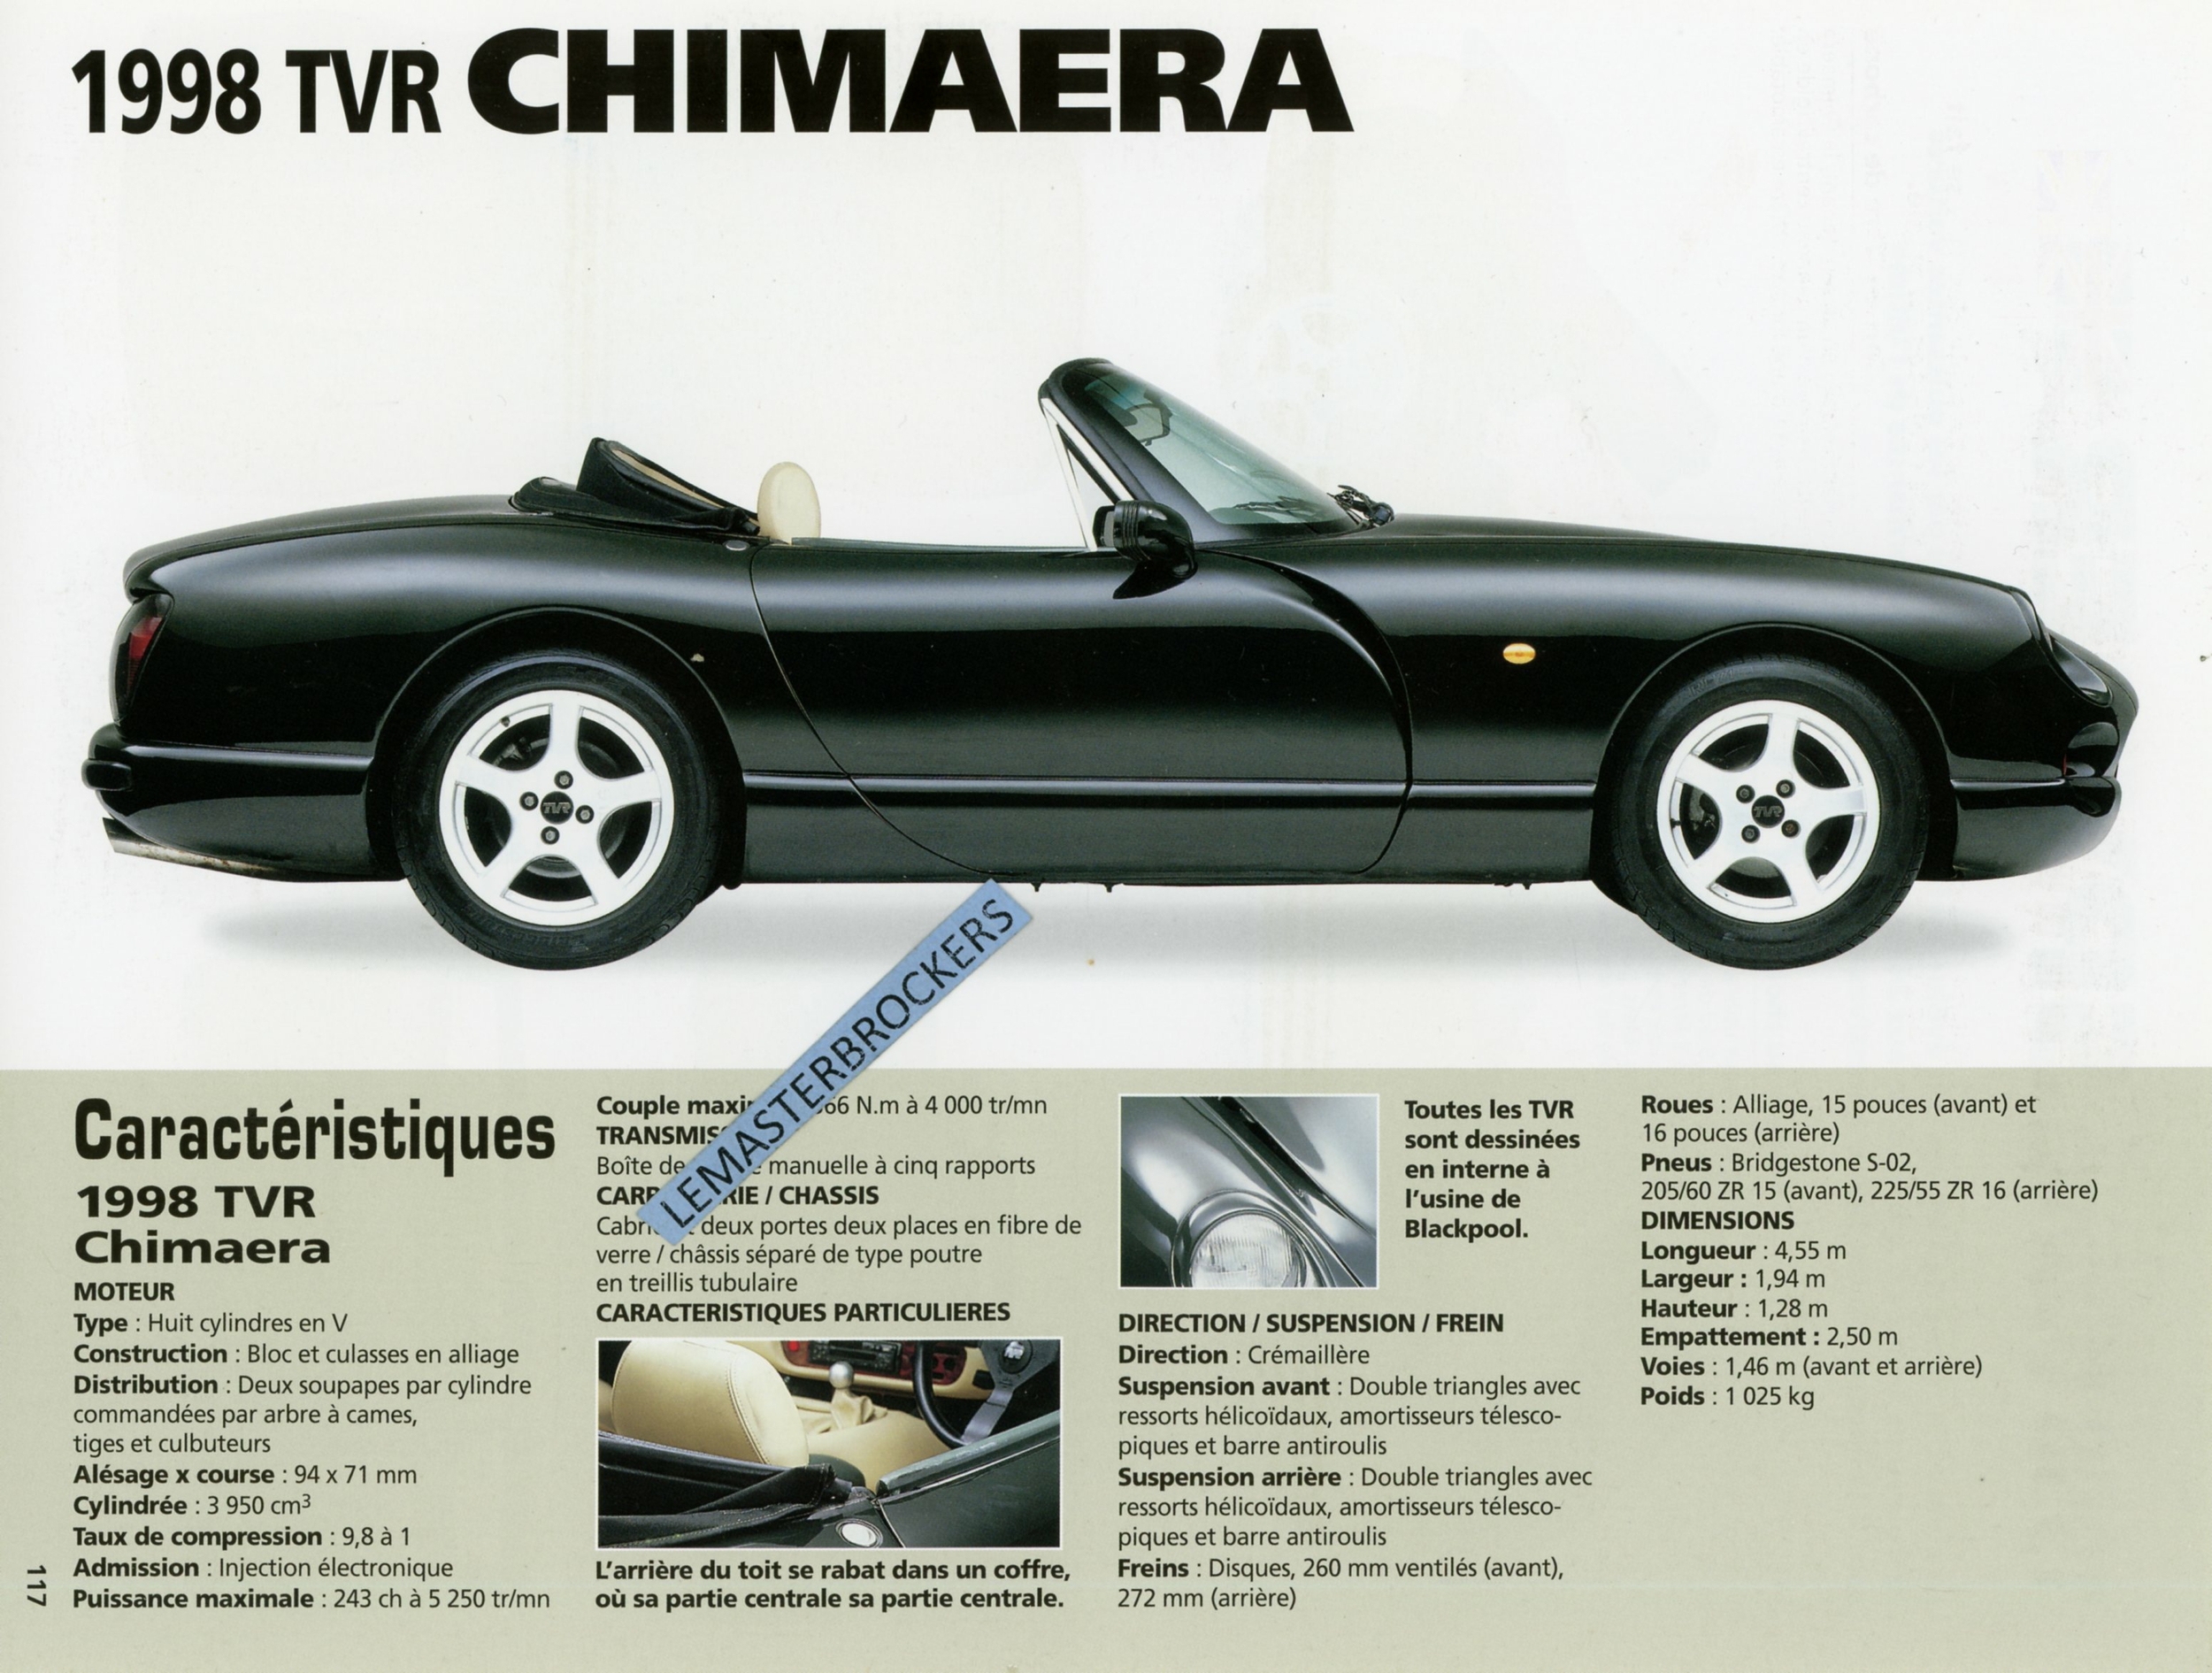 FICHE AUTO TVR CHIMAERA 1998 LEMASTERBROCKERS